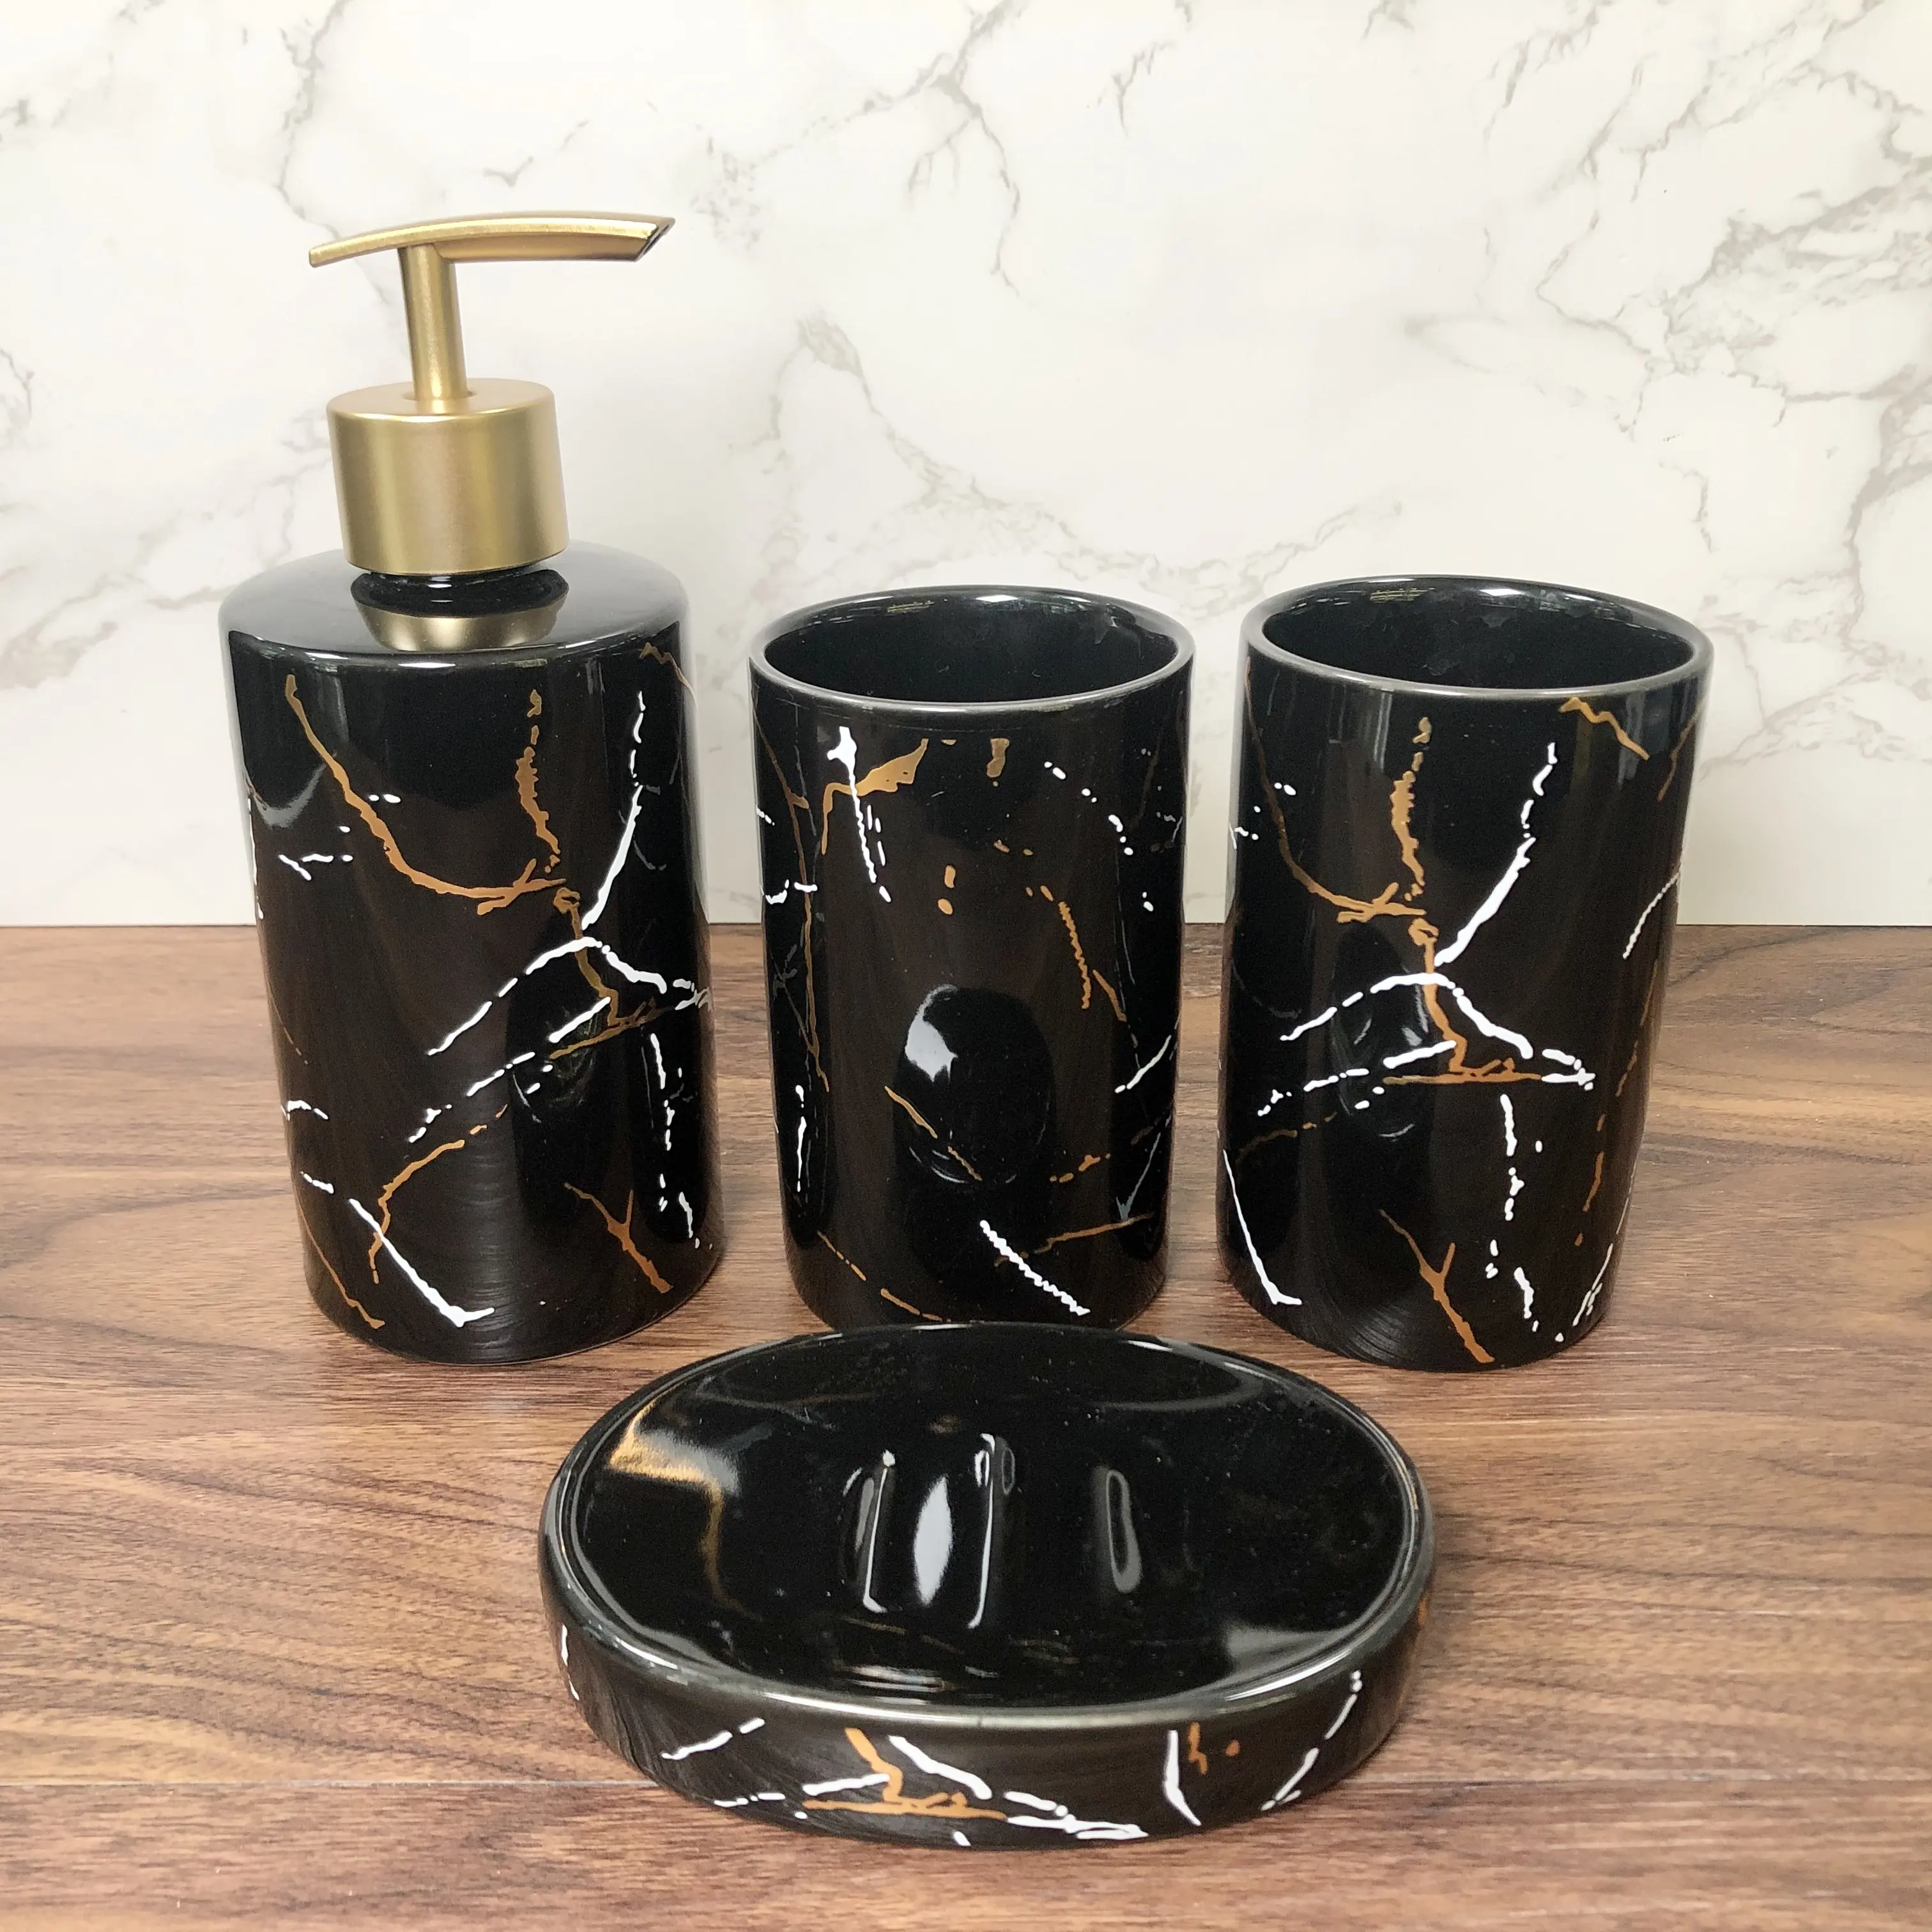 Wholesale spot design bathroom gift soap dispenser ceramic 4 piece bath accessory sets soap dispenser pump